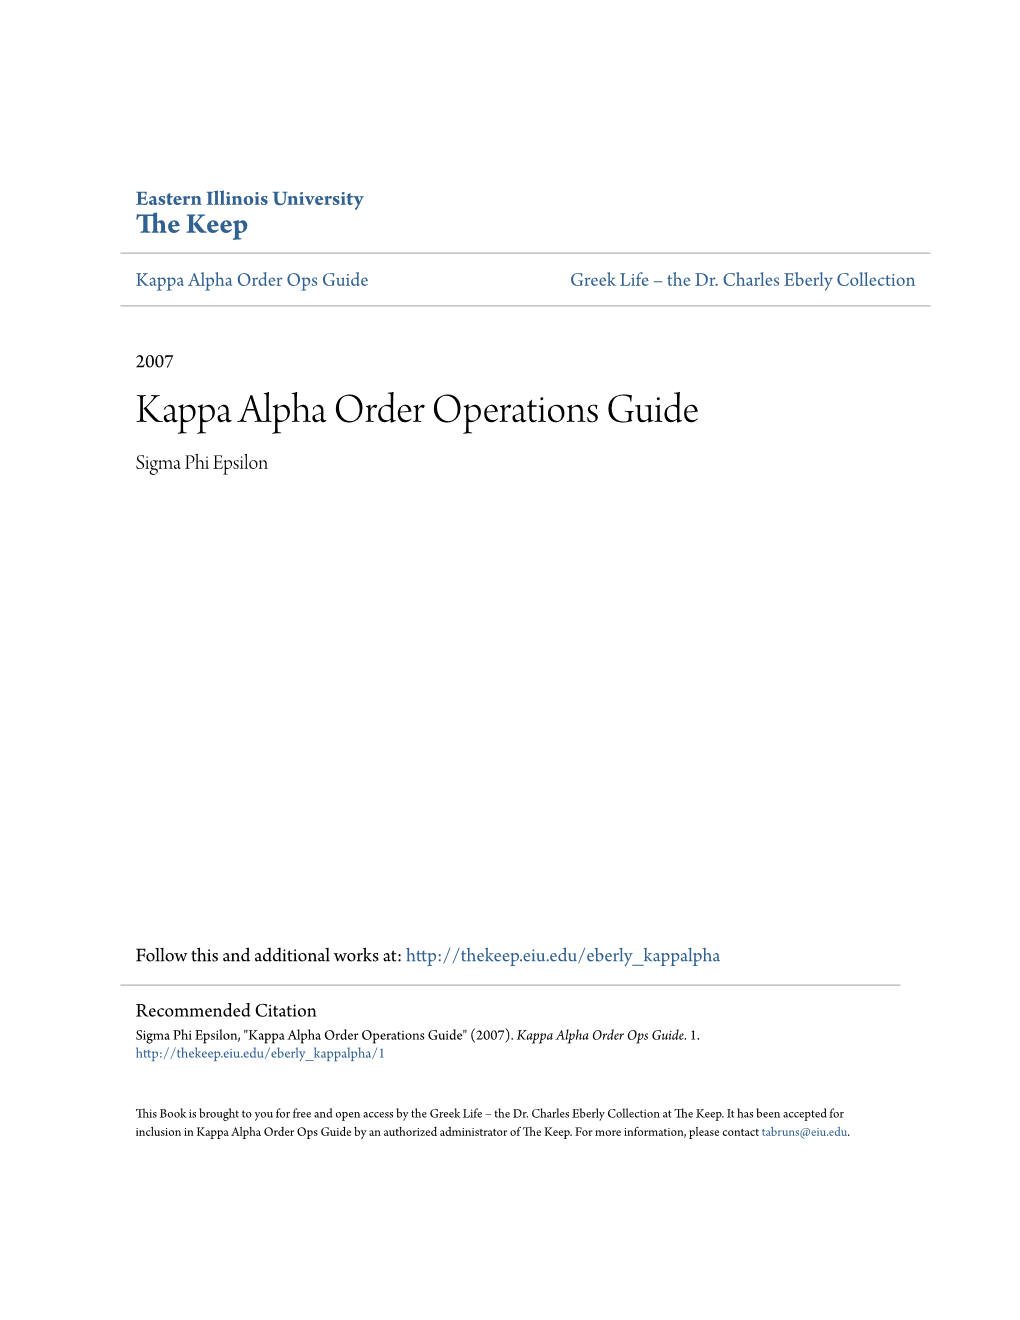 Kappa Alpha Order Operations Guide Sigma Phi Epsilon